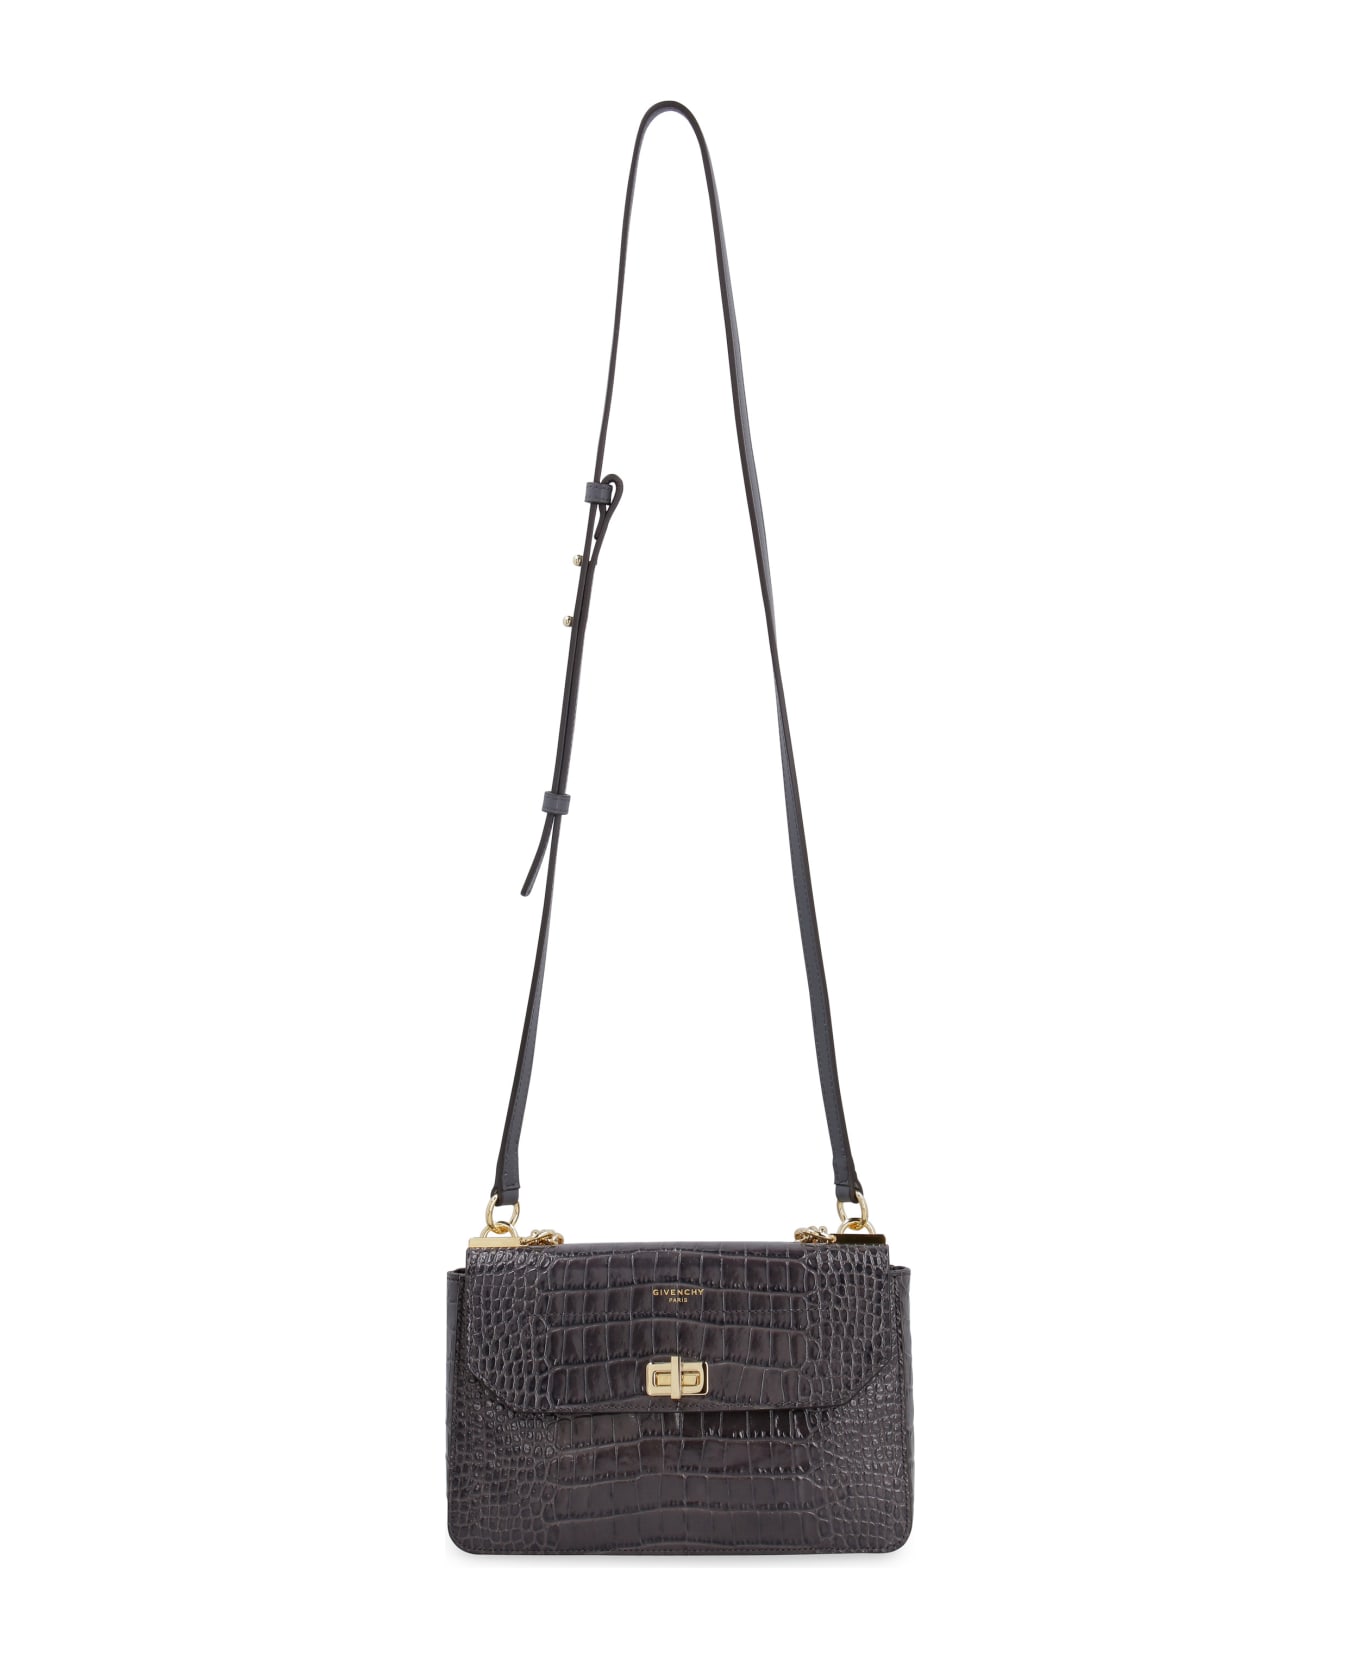 Givenchy Crocodile Effect Leather Bag | italist